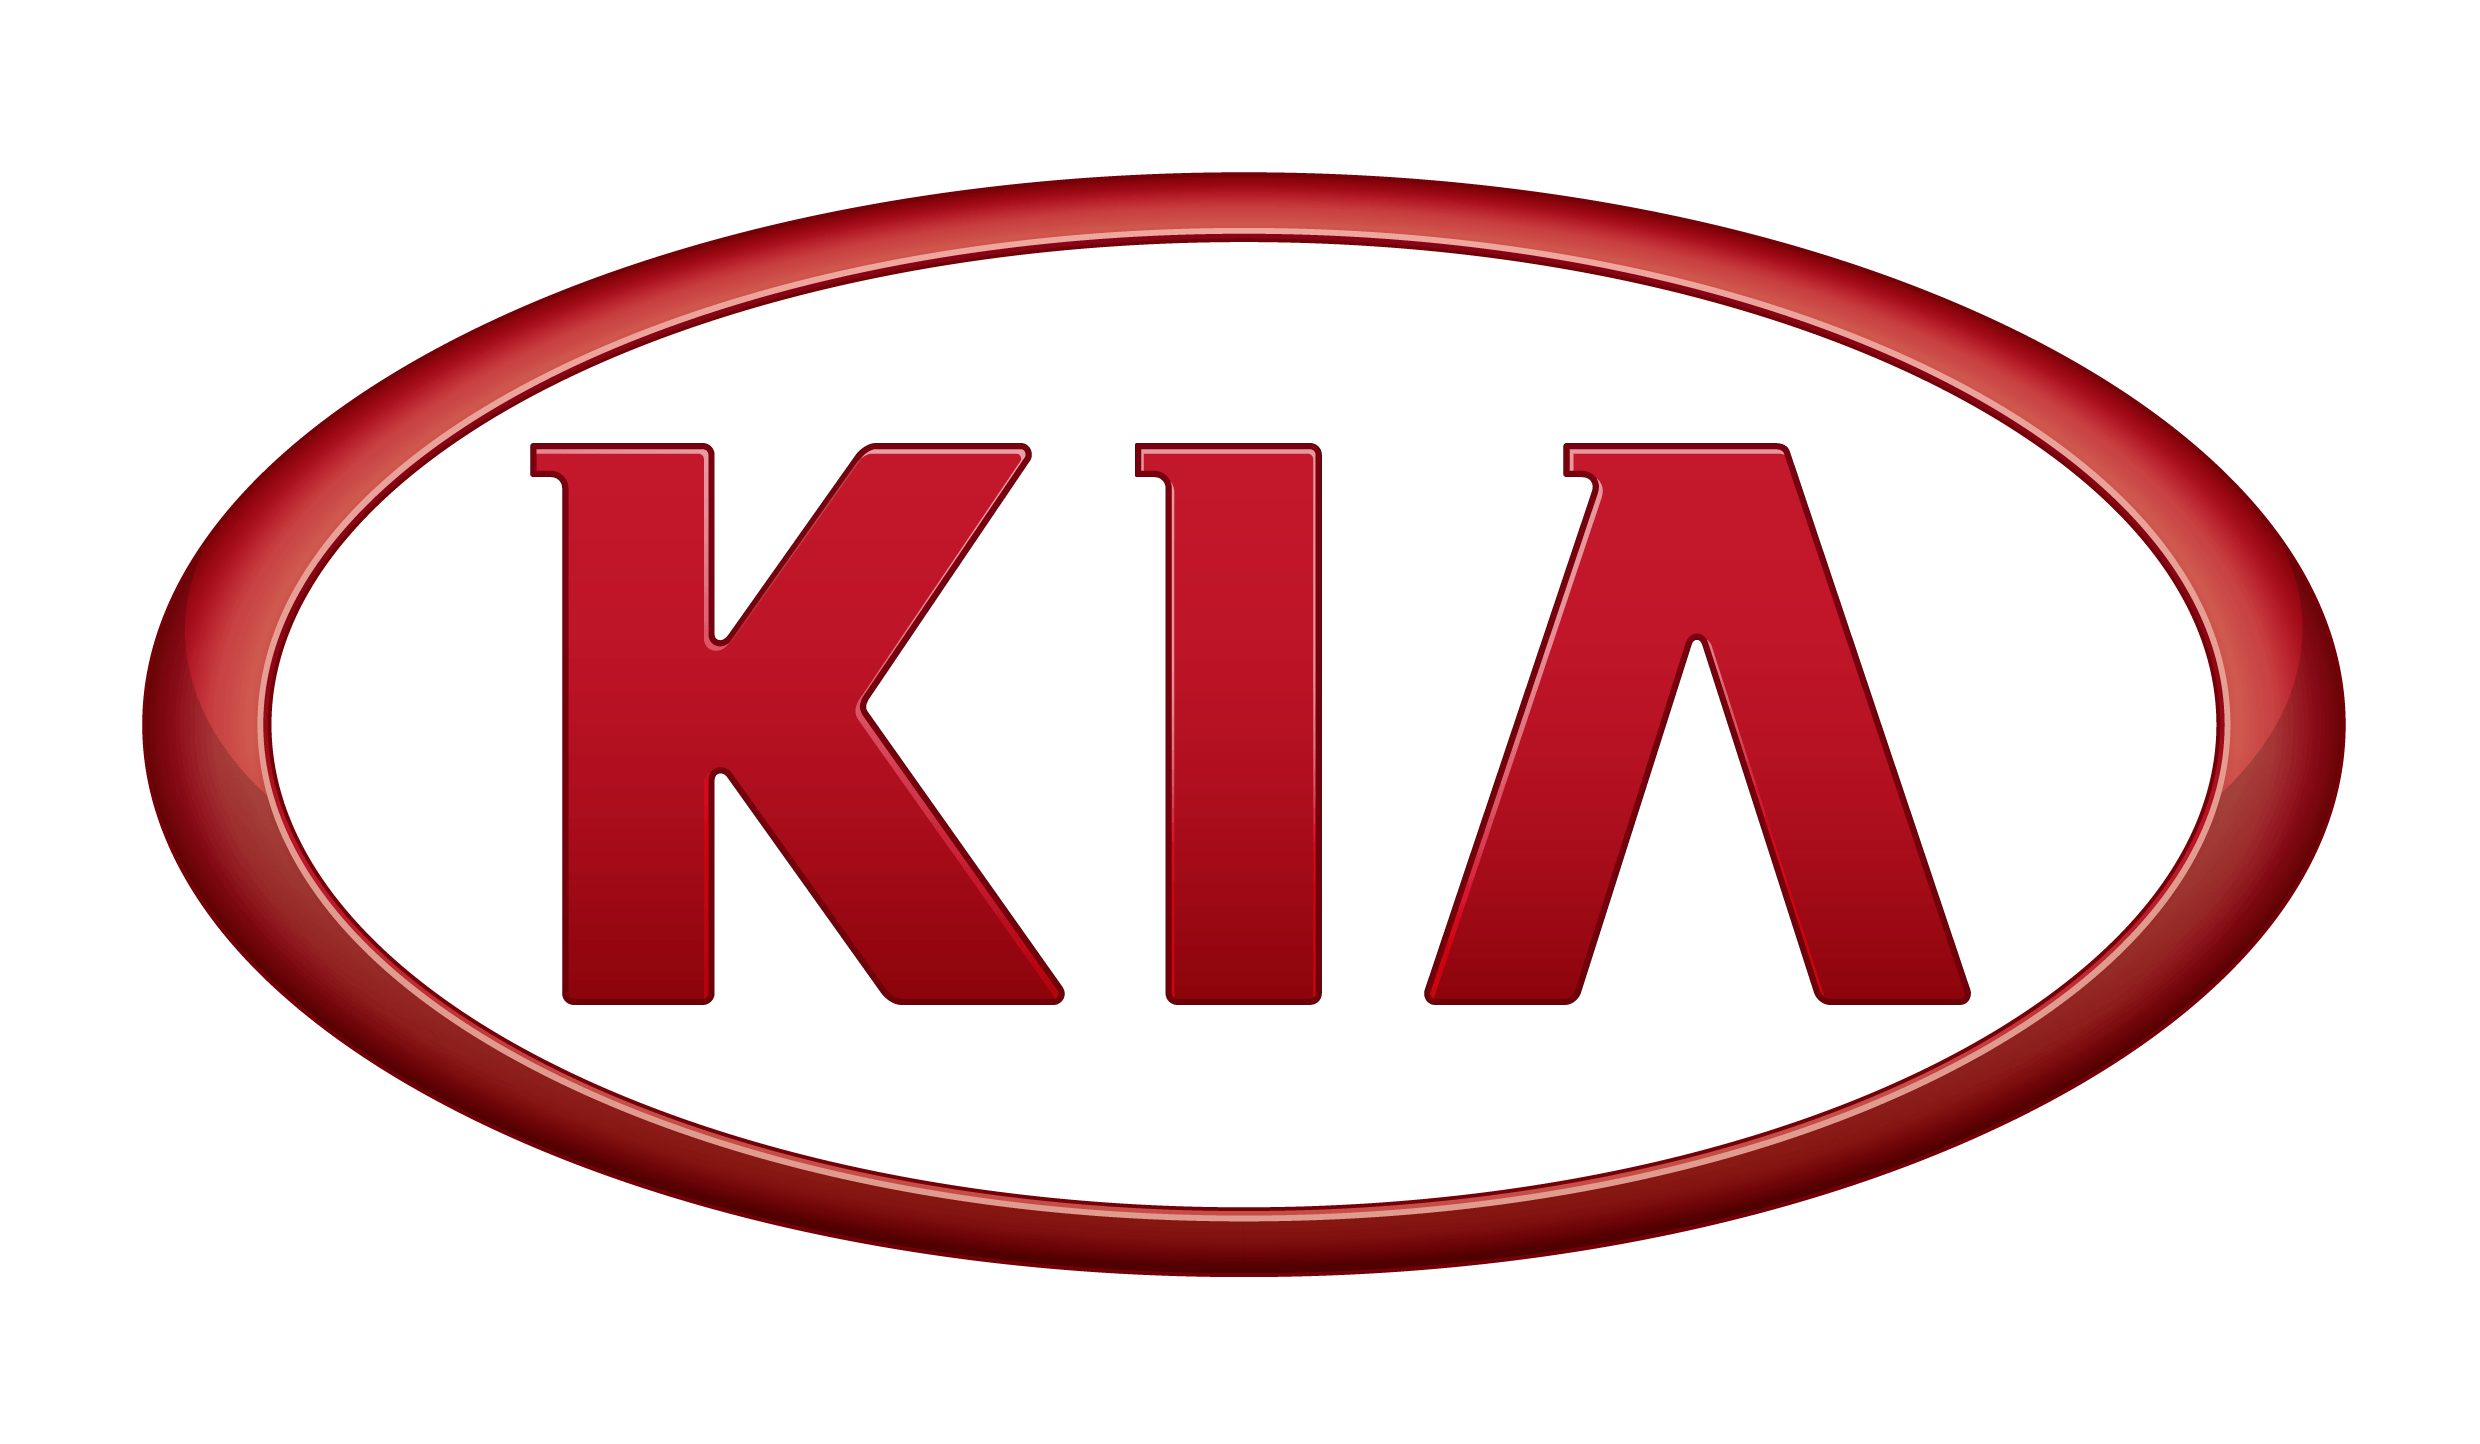 Red and White Oval Car Logo - Kia Logo, Kia Car Symbol Meaning and History | Car Brand Names.com